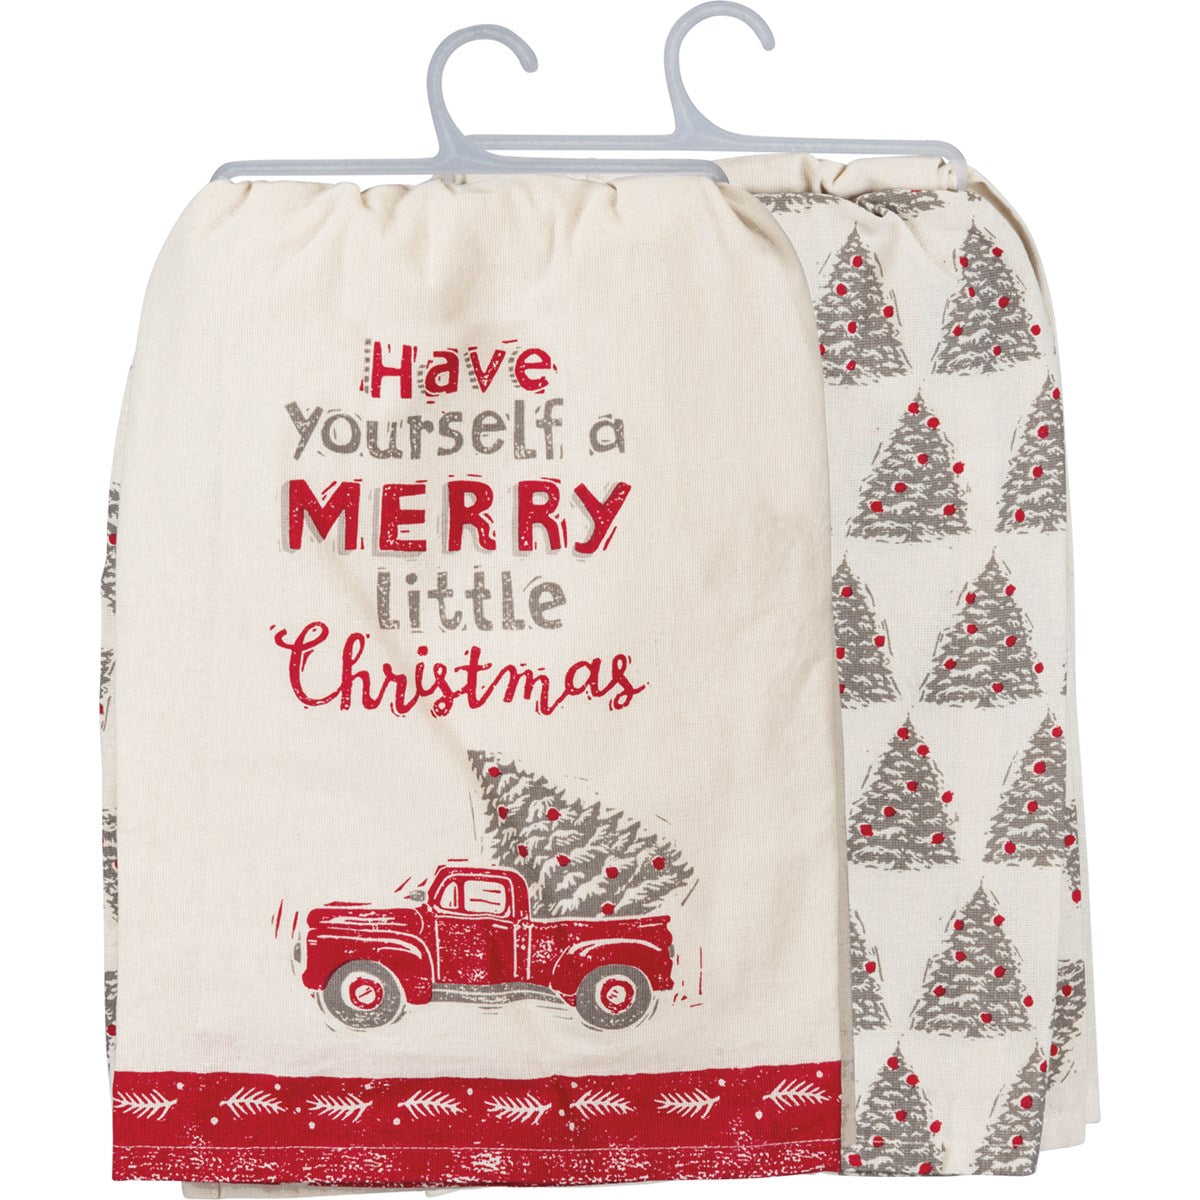 Merry Little Christmas Towel Set